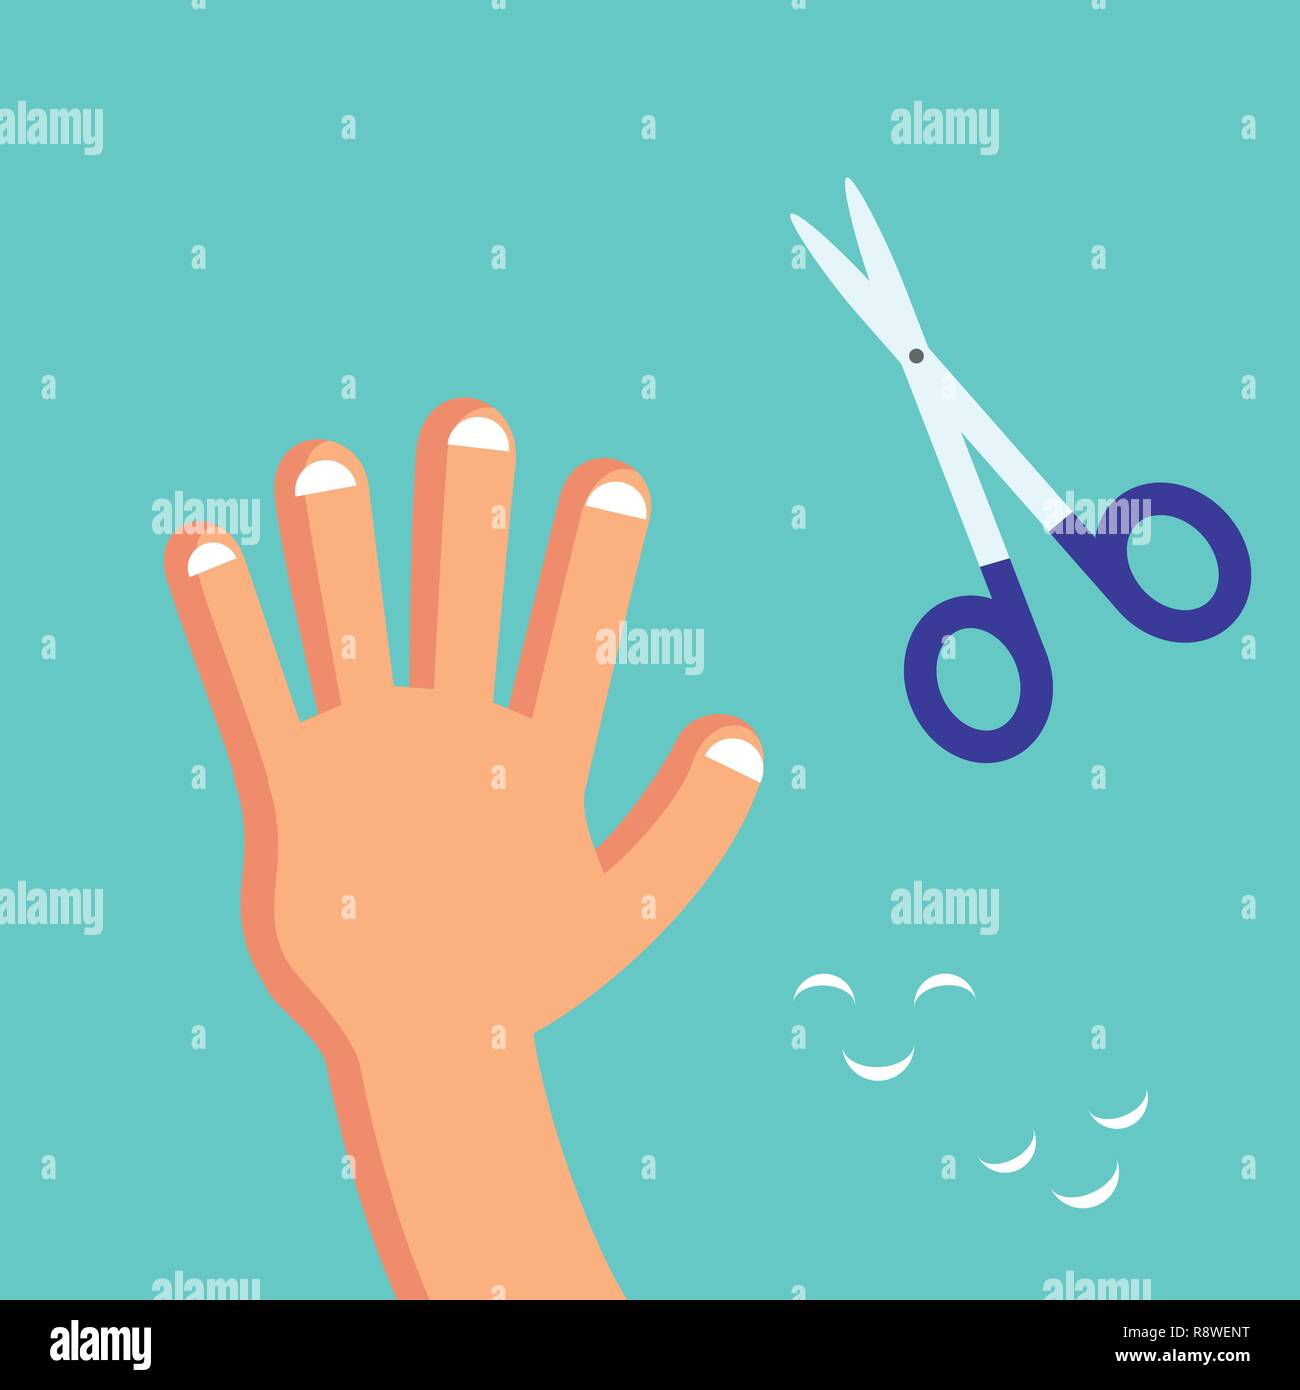 Cutting Your Fingernails stock photo. Image of metallic - 25004168